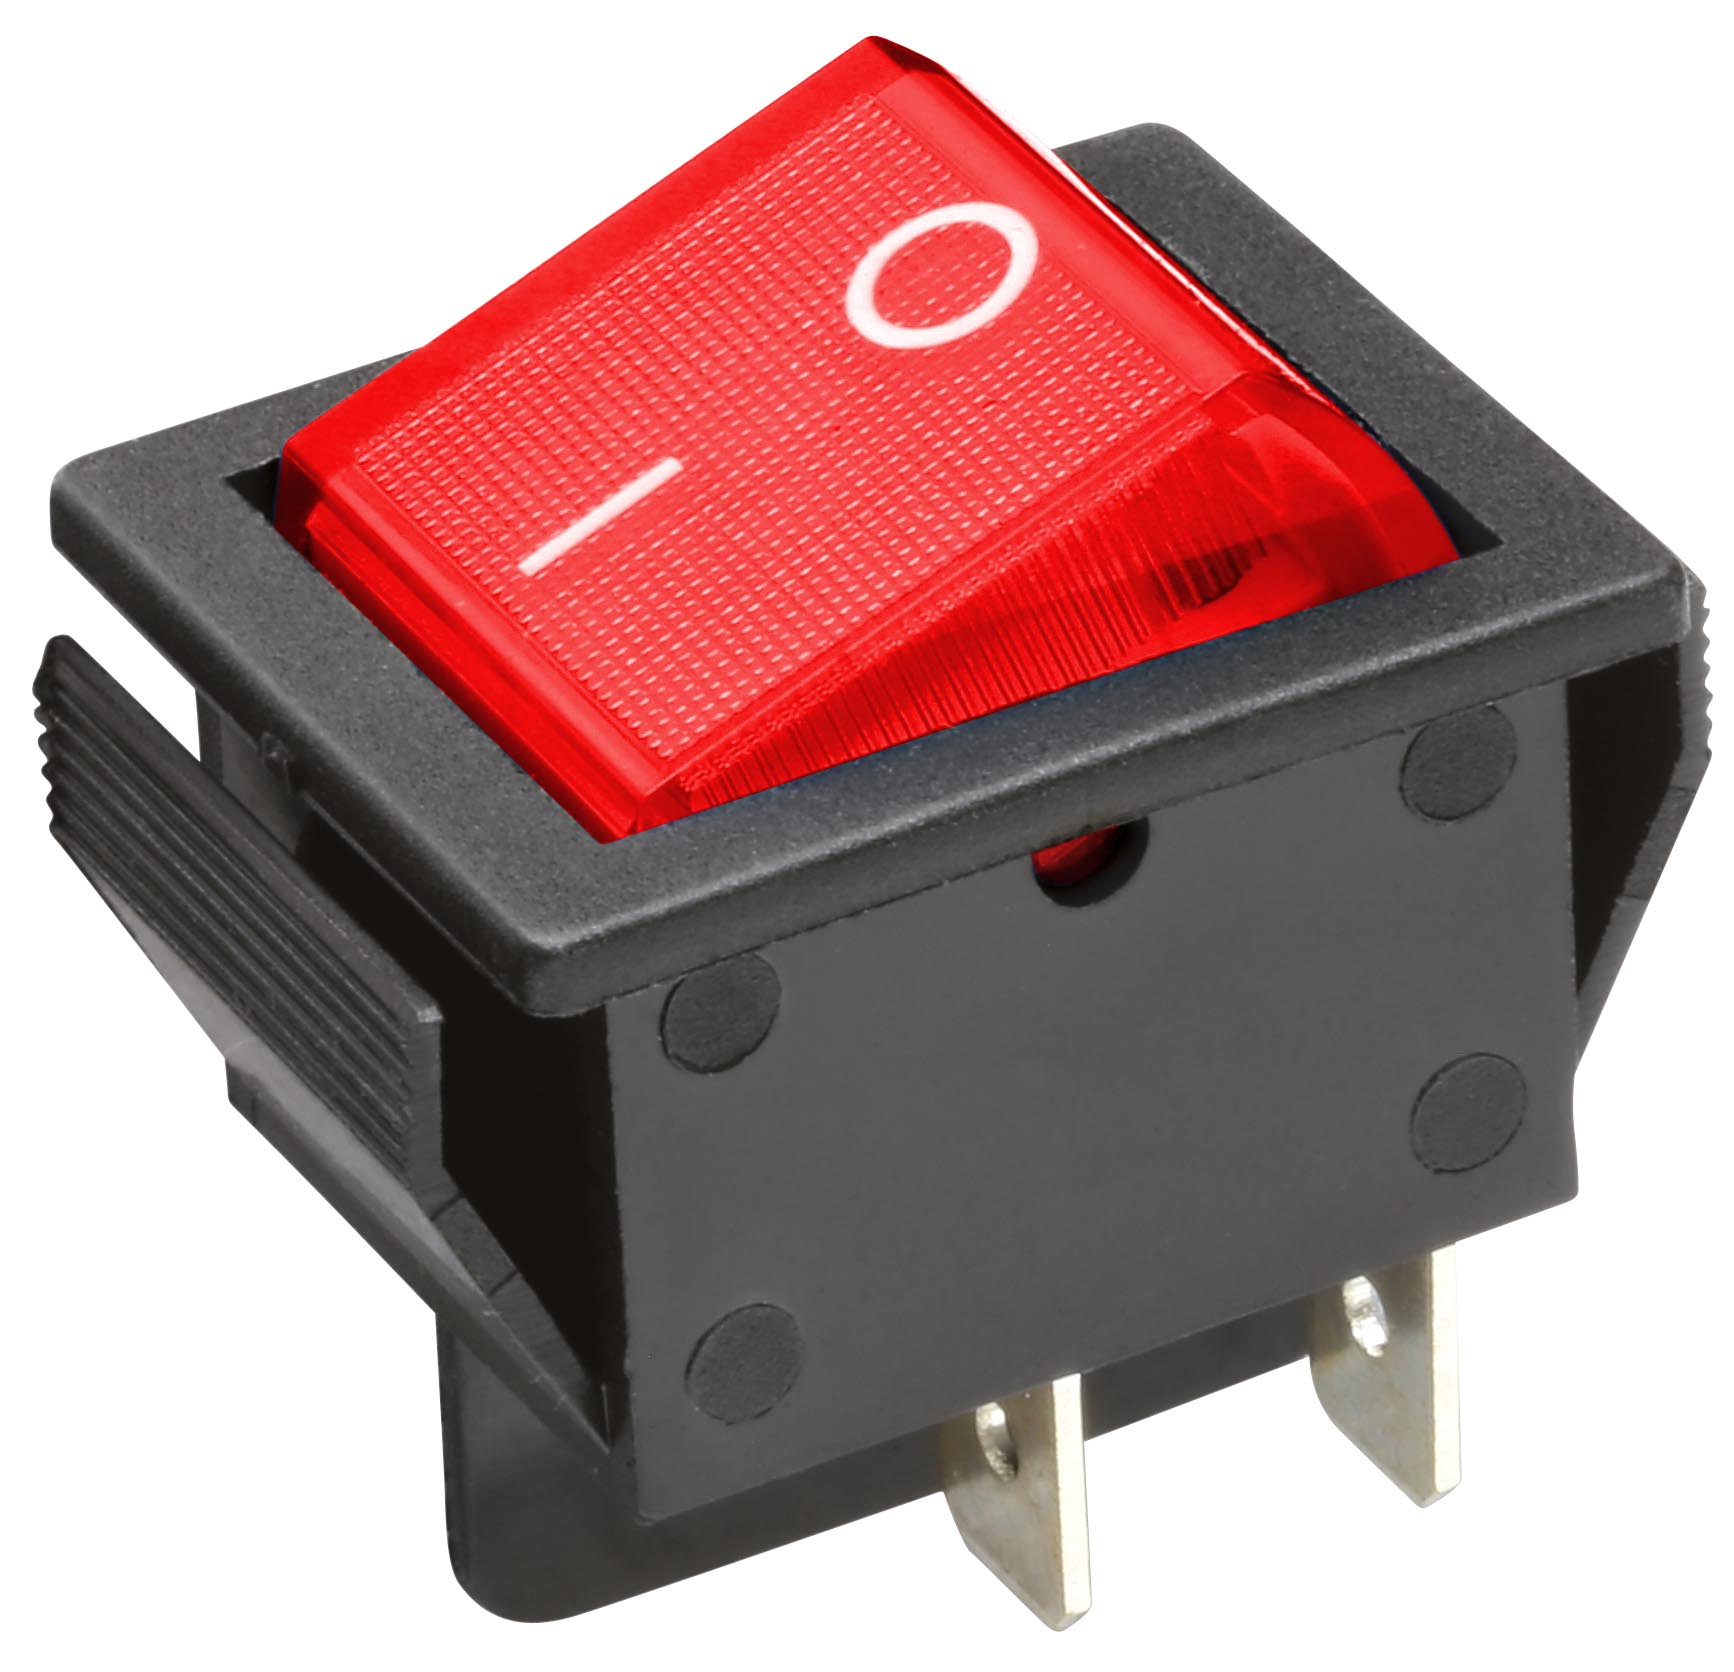 Schalter mit roter beleuchteter Wippe.